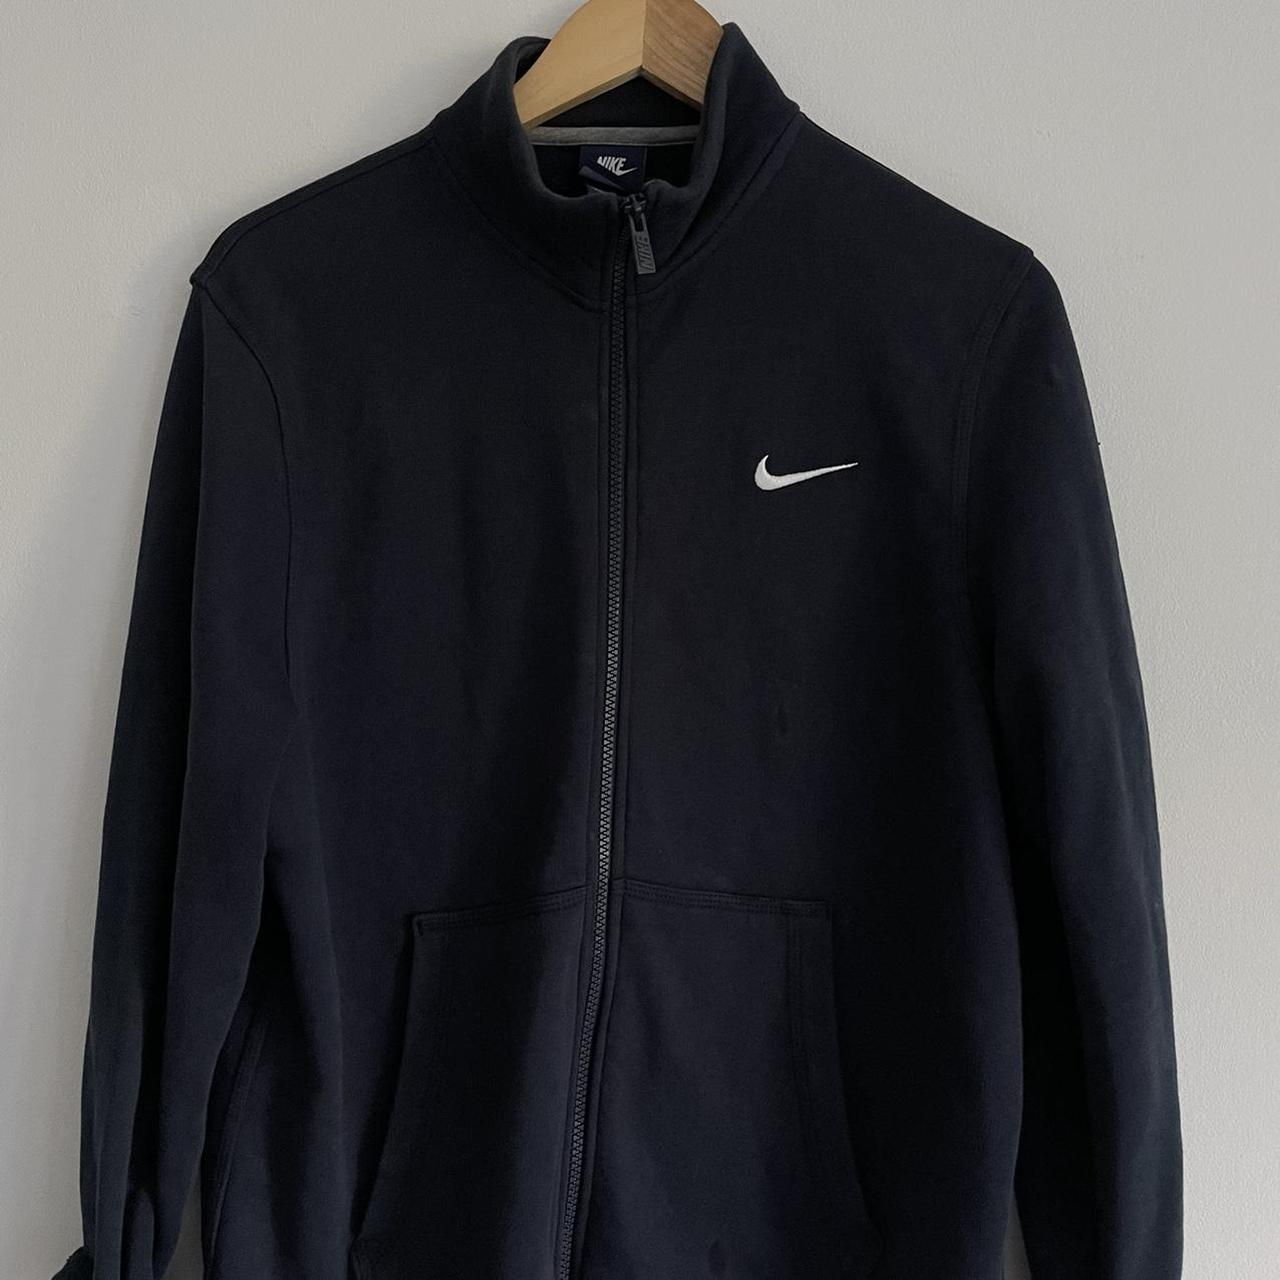 Nike foundation navy zip up fleece jacket Size... - Depop